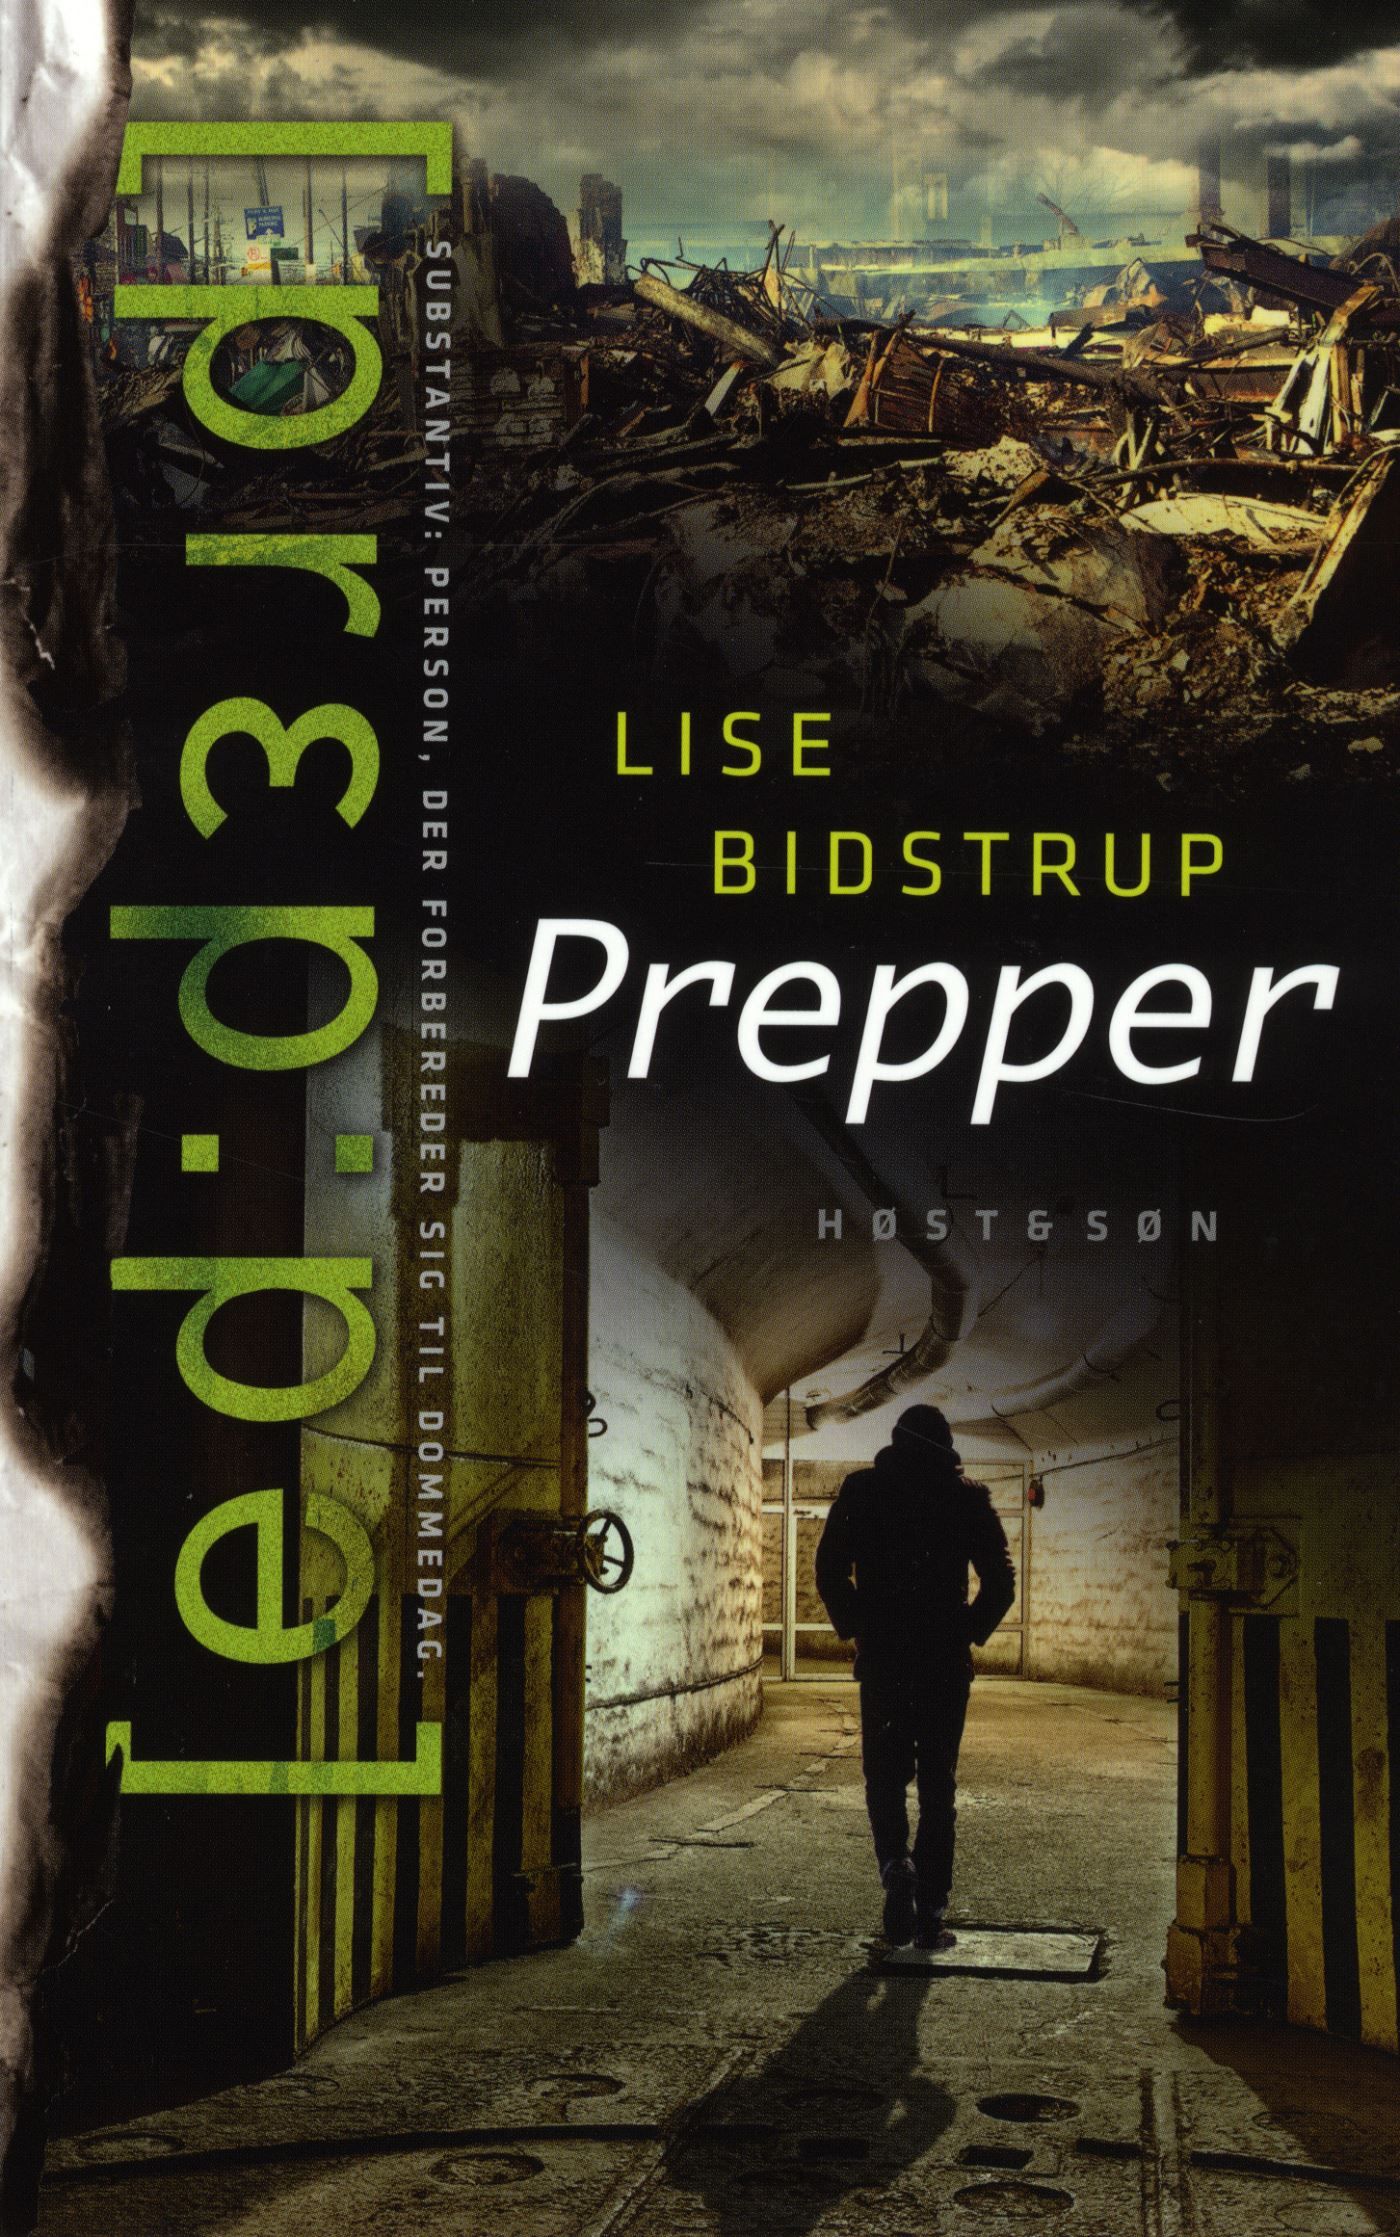 Prepper, ljudbok av Lise Bidstrup